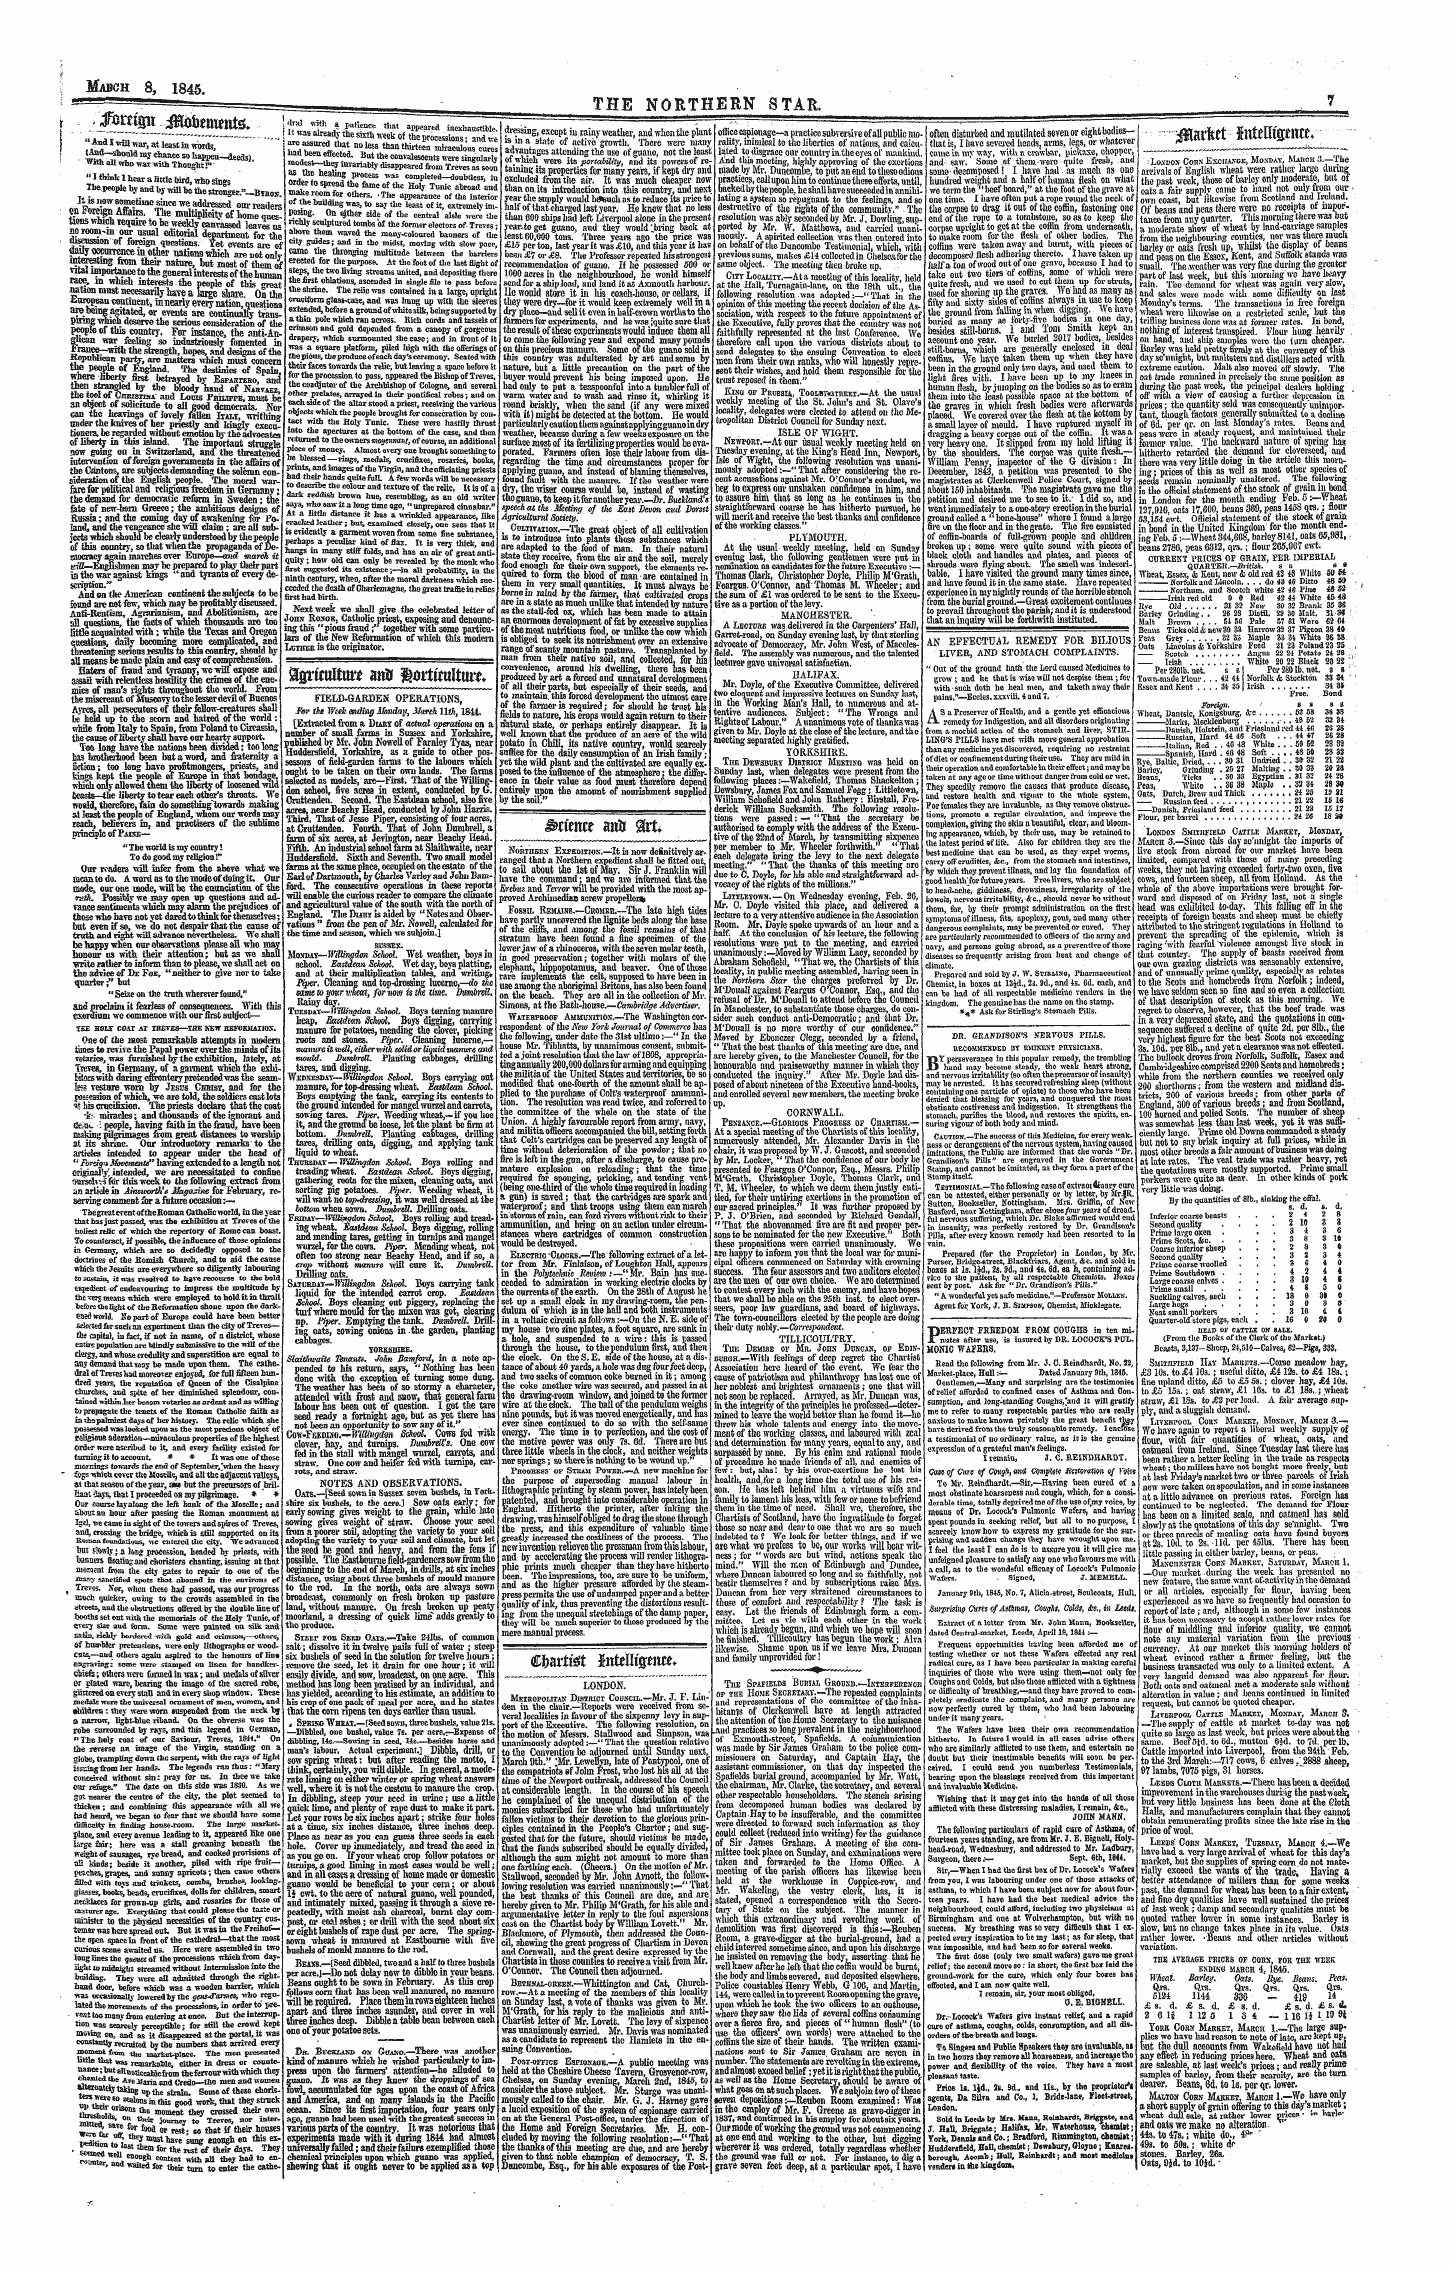 Northern Star (1837-1852): jS F Y, 1st edition - G Grtmltw* Ana %Artttttltm* V